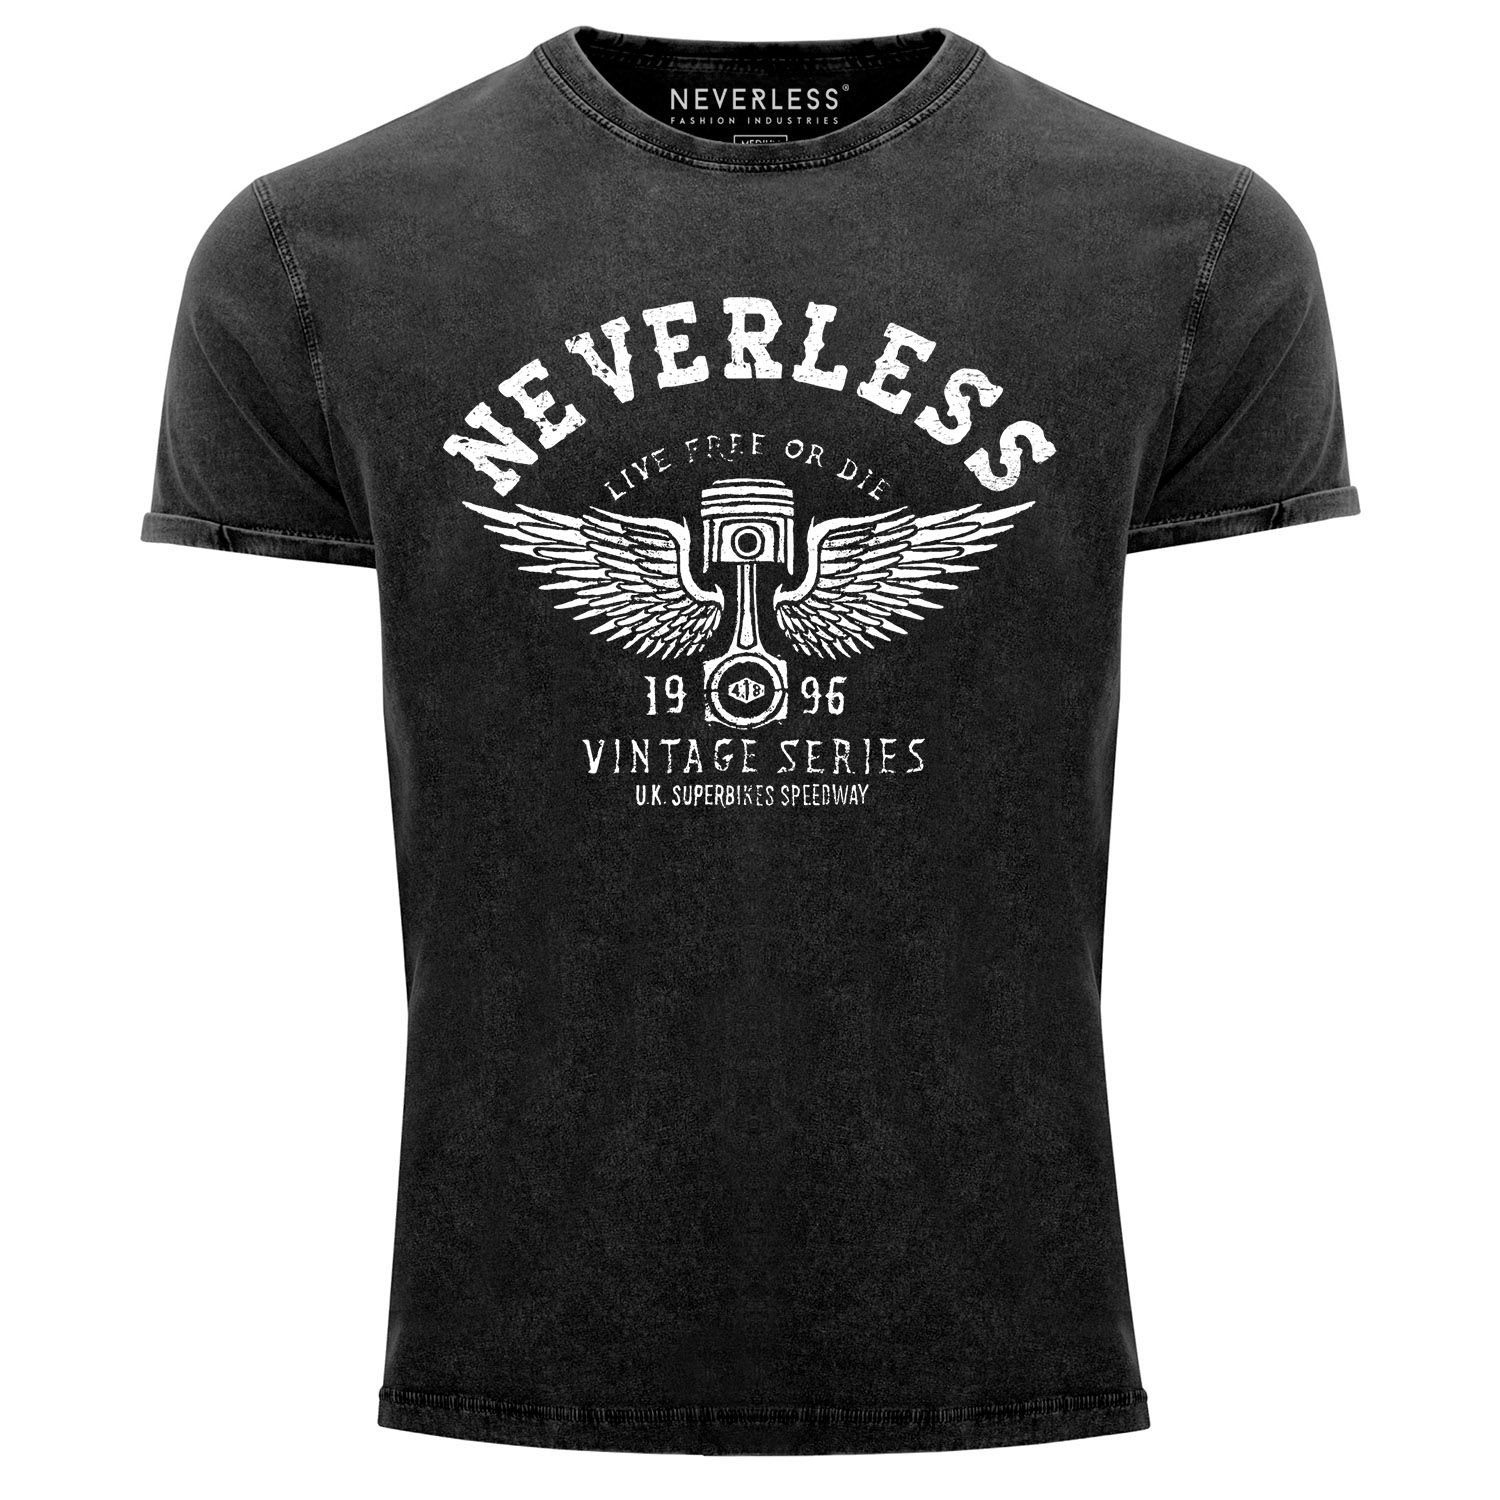 Neverless Print-Shirt Cooles Angesagtes Herren T-Shirt Vintage Shirt Retro Auto Kolben Used Look Slim Fit Neverless® mit Print schwarz